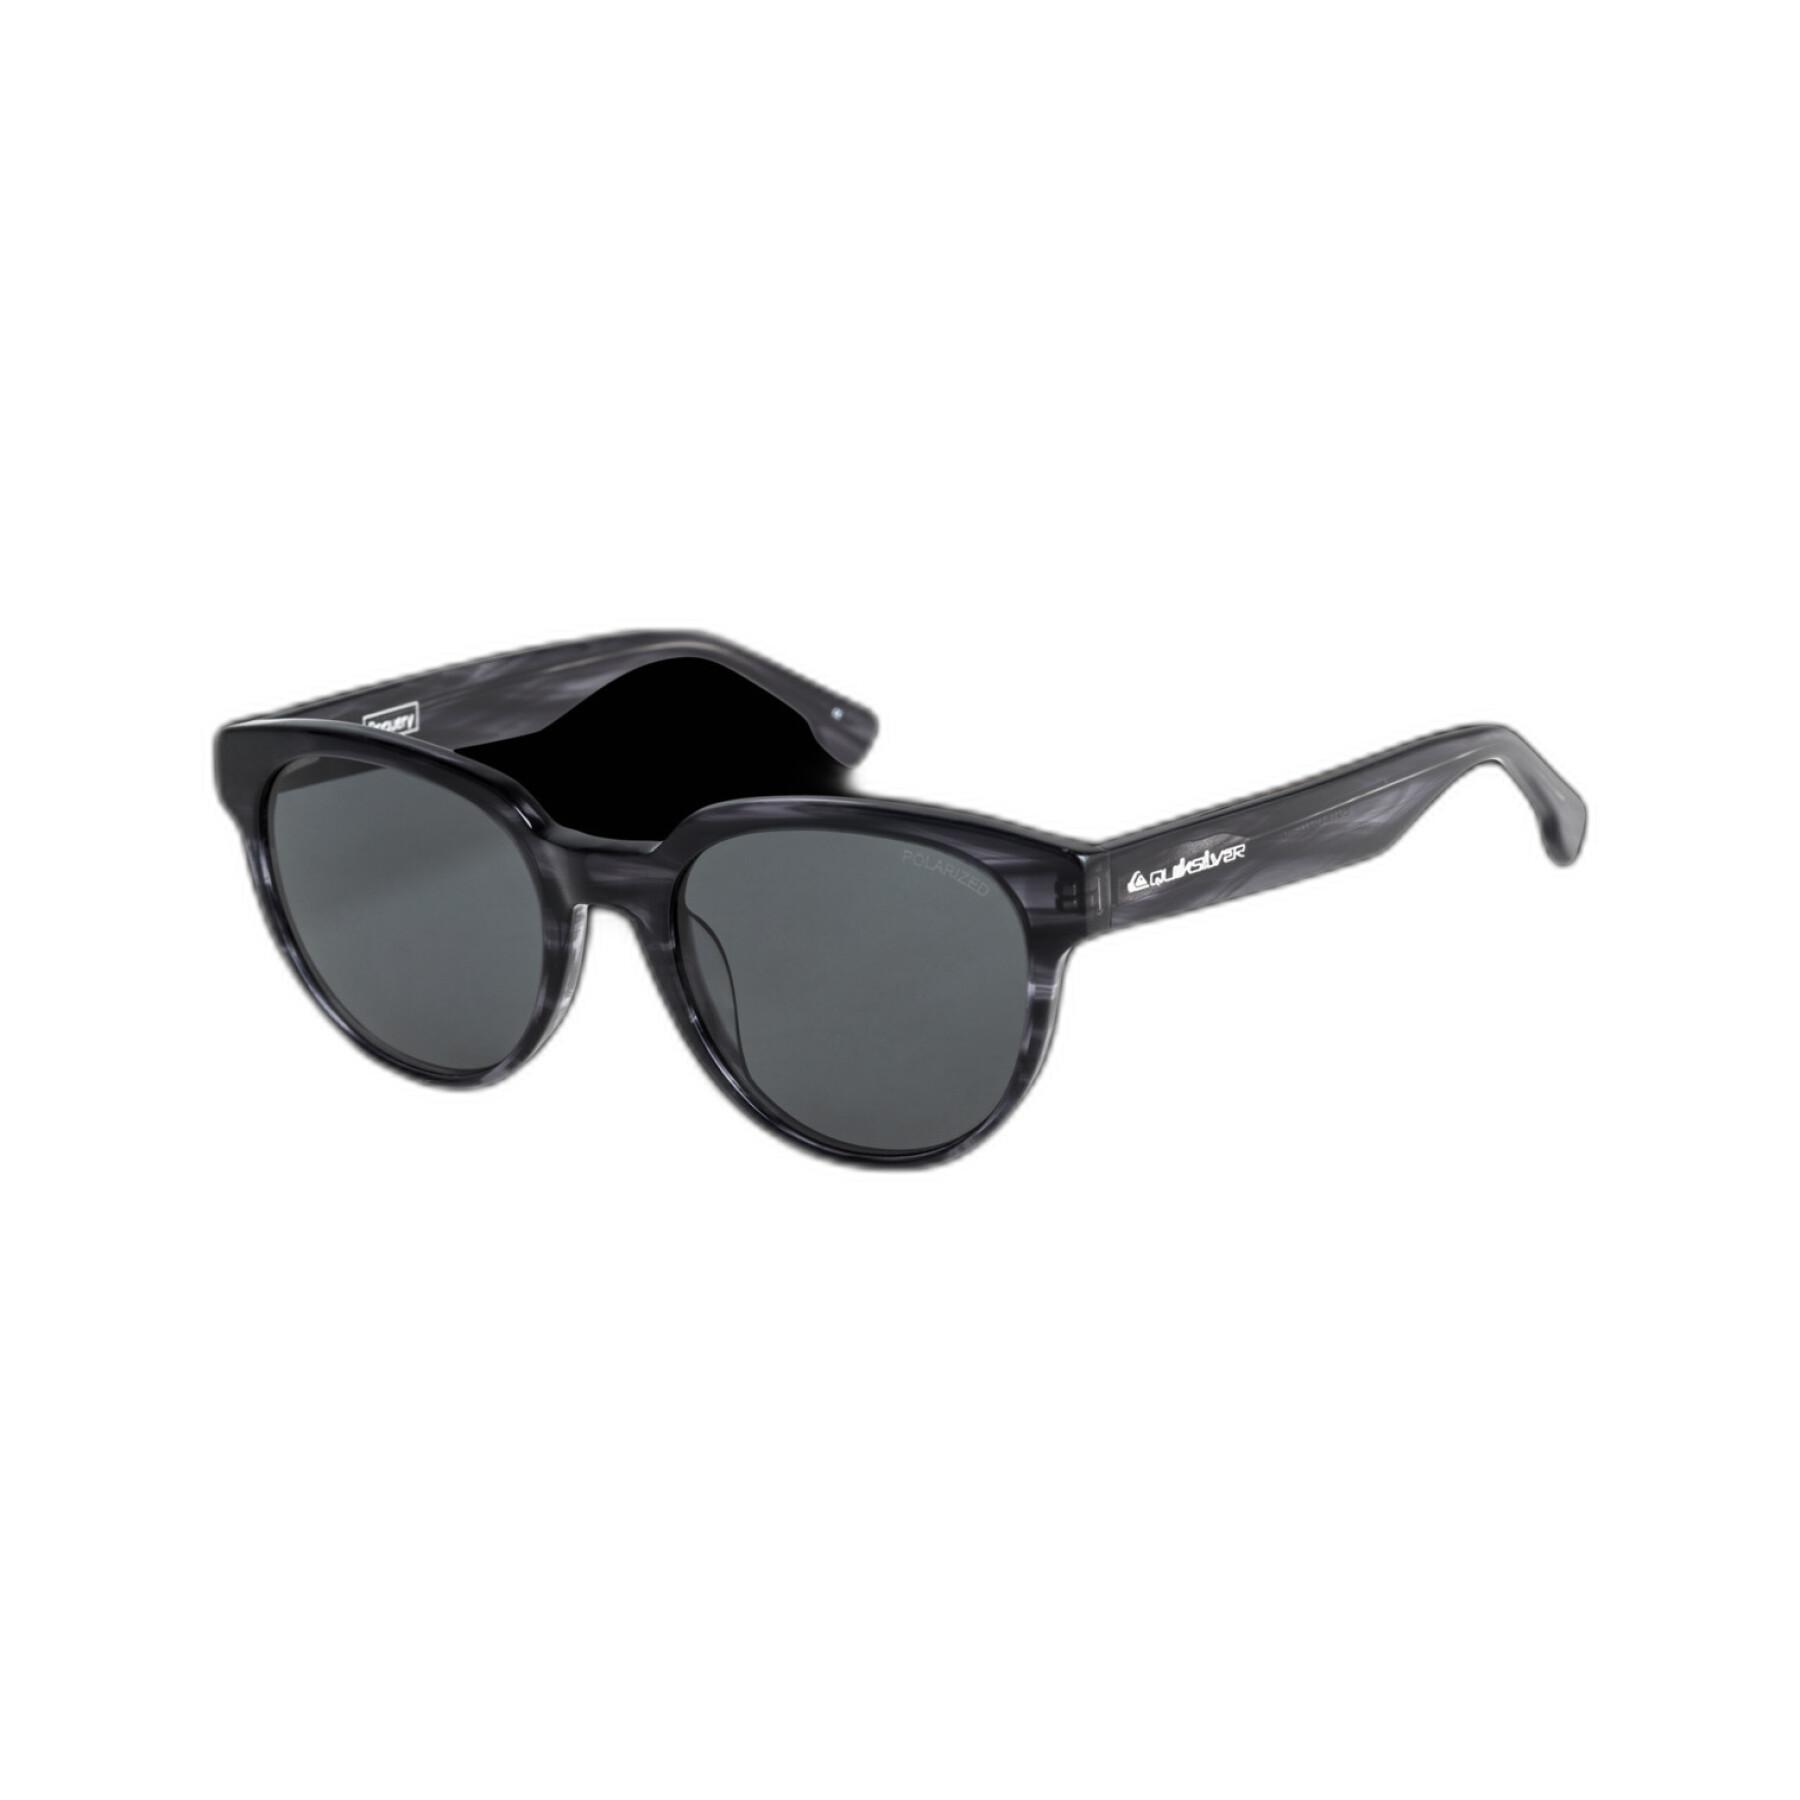 Polarized sunglasses Quiksilver Roguery Accessories - Fashion - Sunglasses Accessories 